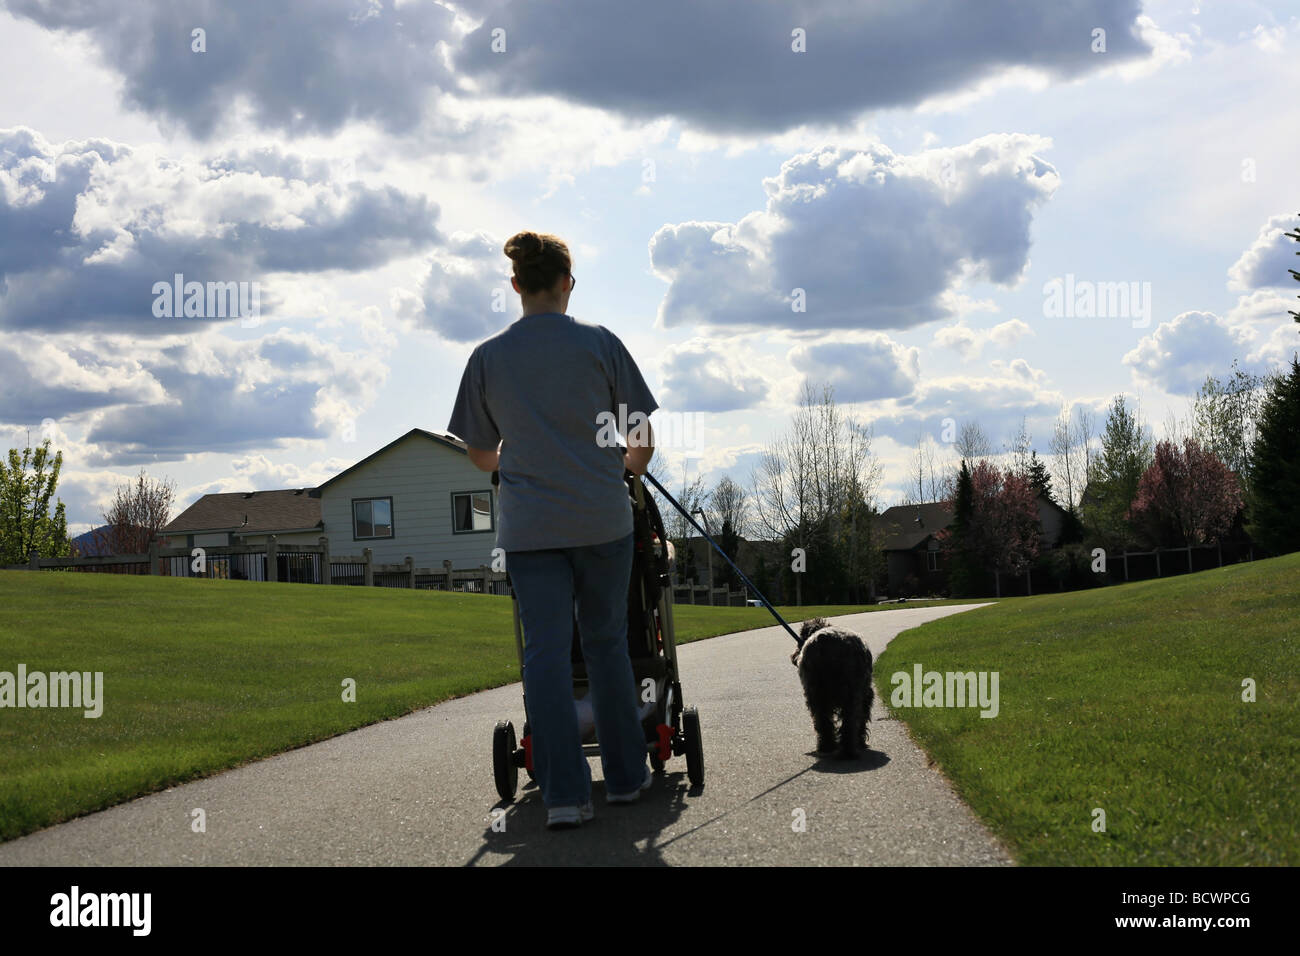 Mom pushing stroller and walking the dog in suburban neighborhoood Stock Photo